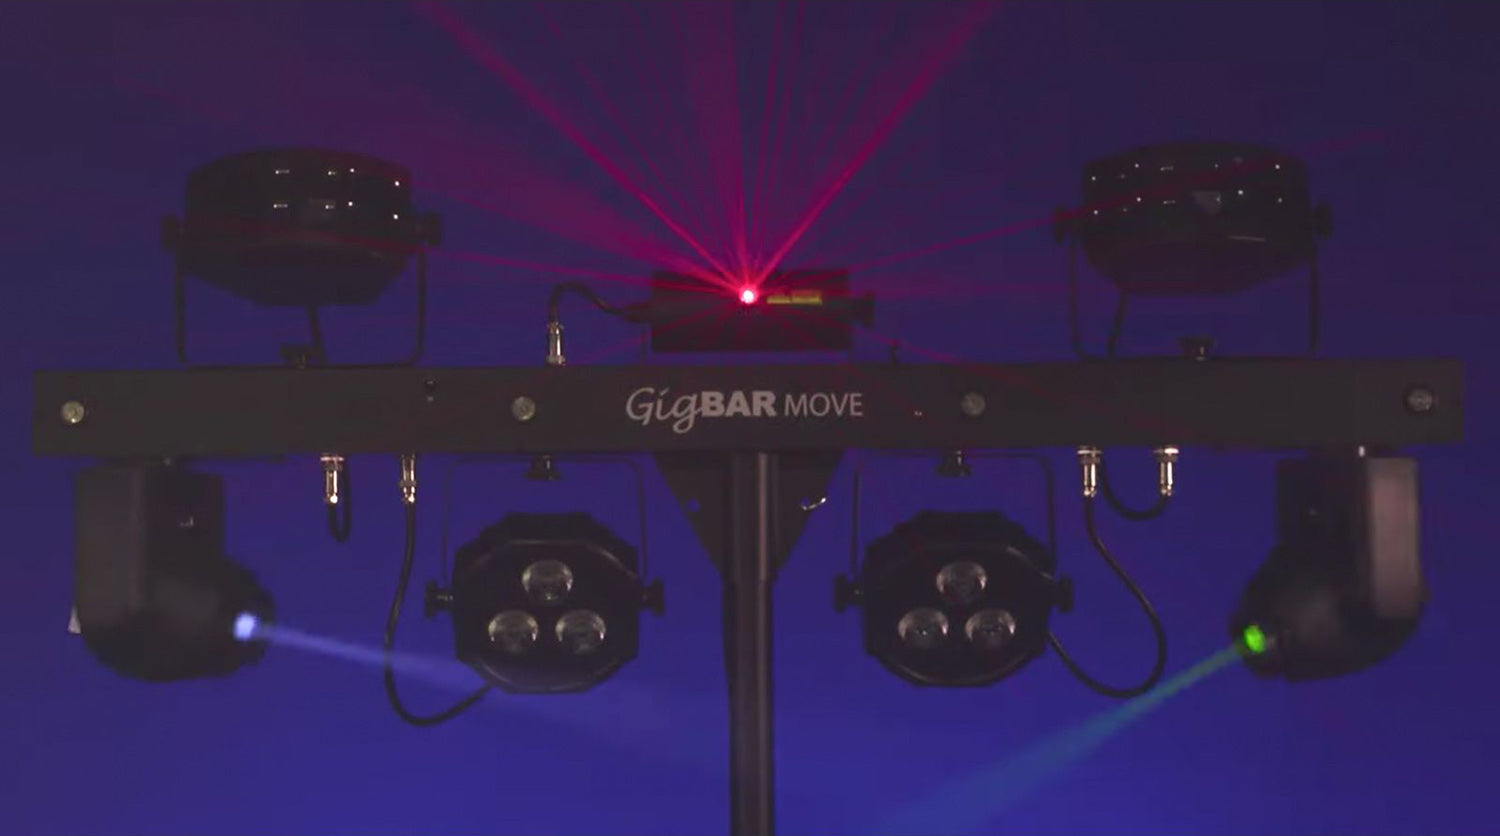 Chauvet DJ GIGBAR MOVE 5-in-1 Lighting System with Pre-Mounted Single Bar - Hollywood DJ